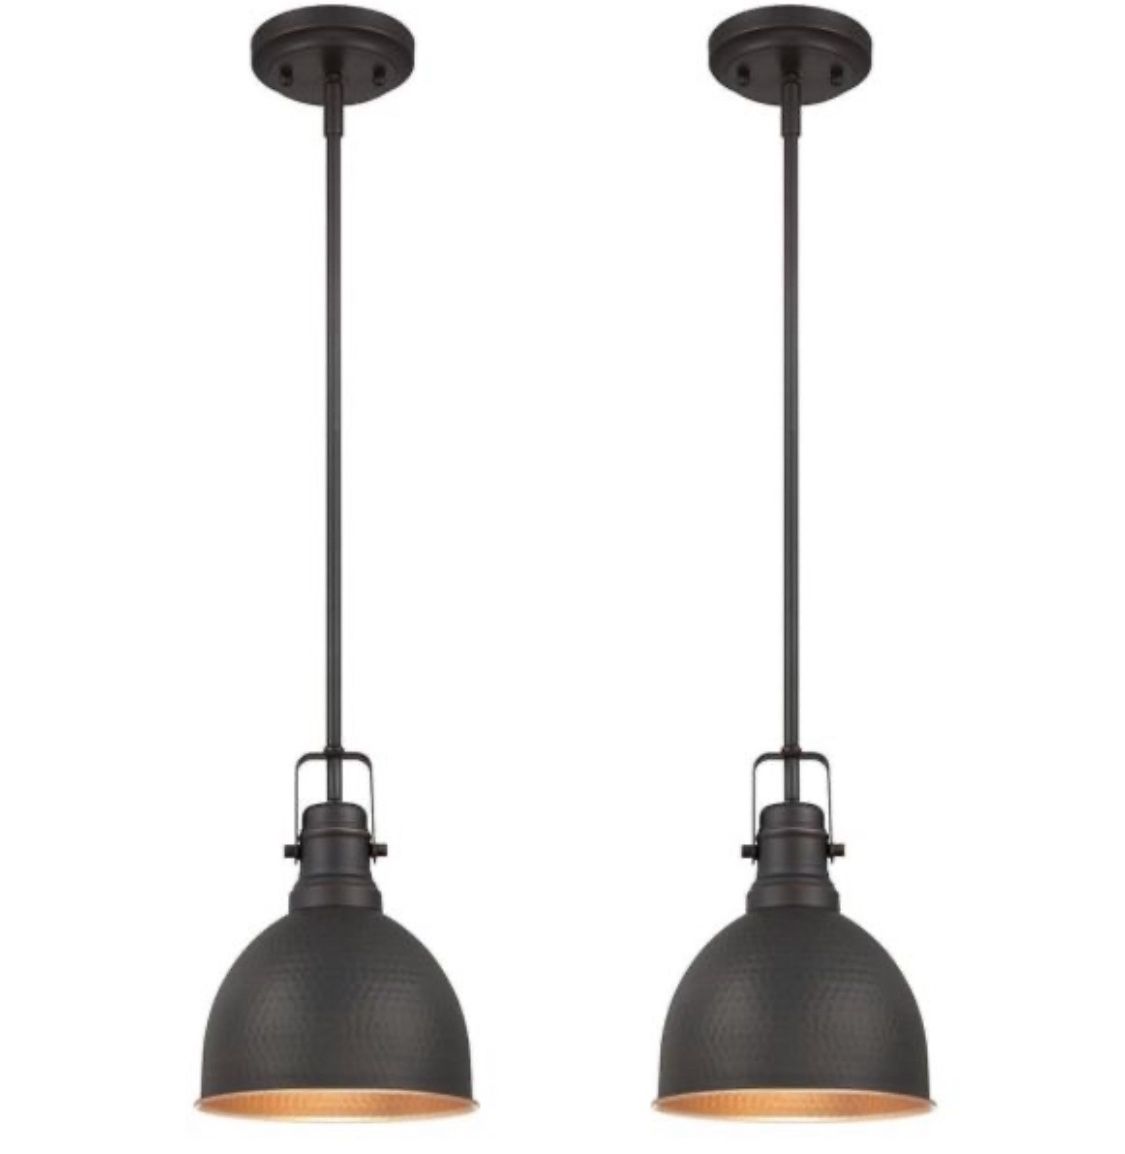 Set of 2 industrial pendant kitchen island lights hammered metal shades